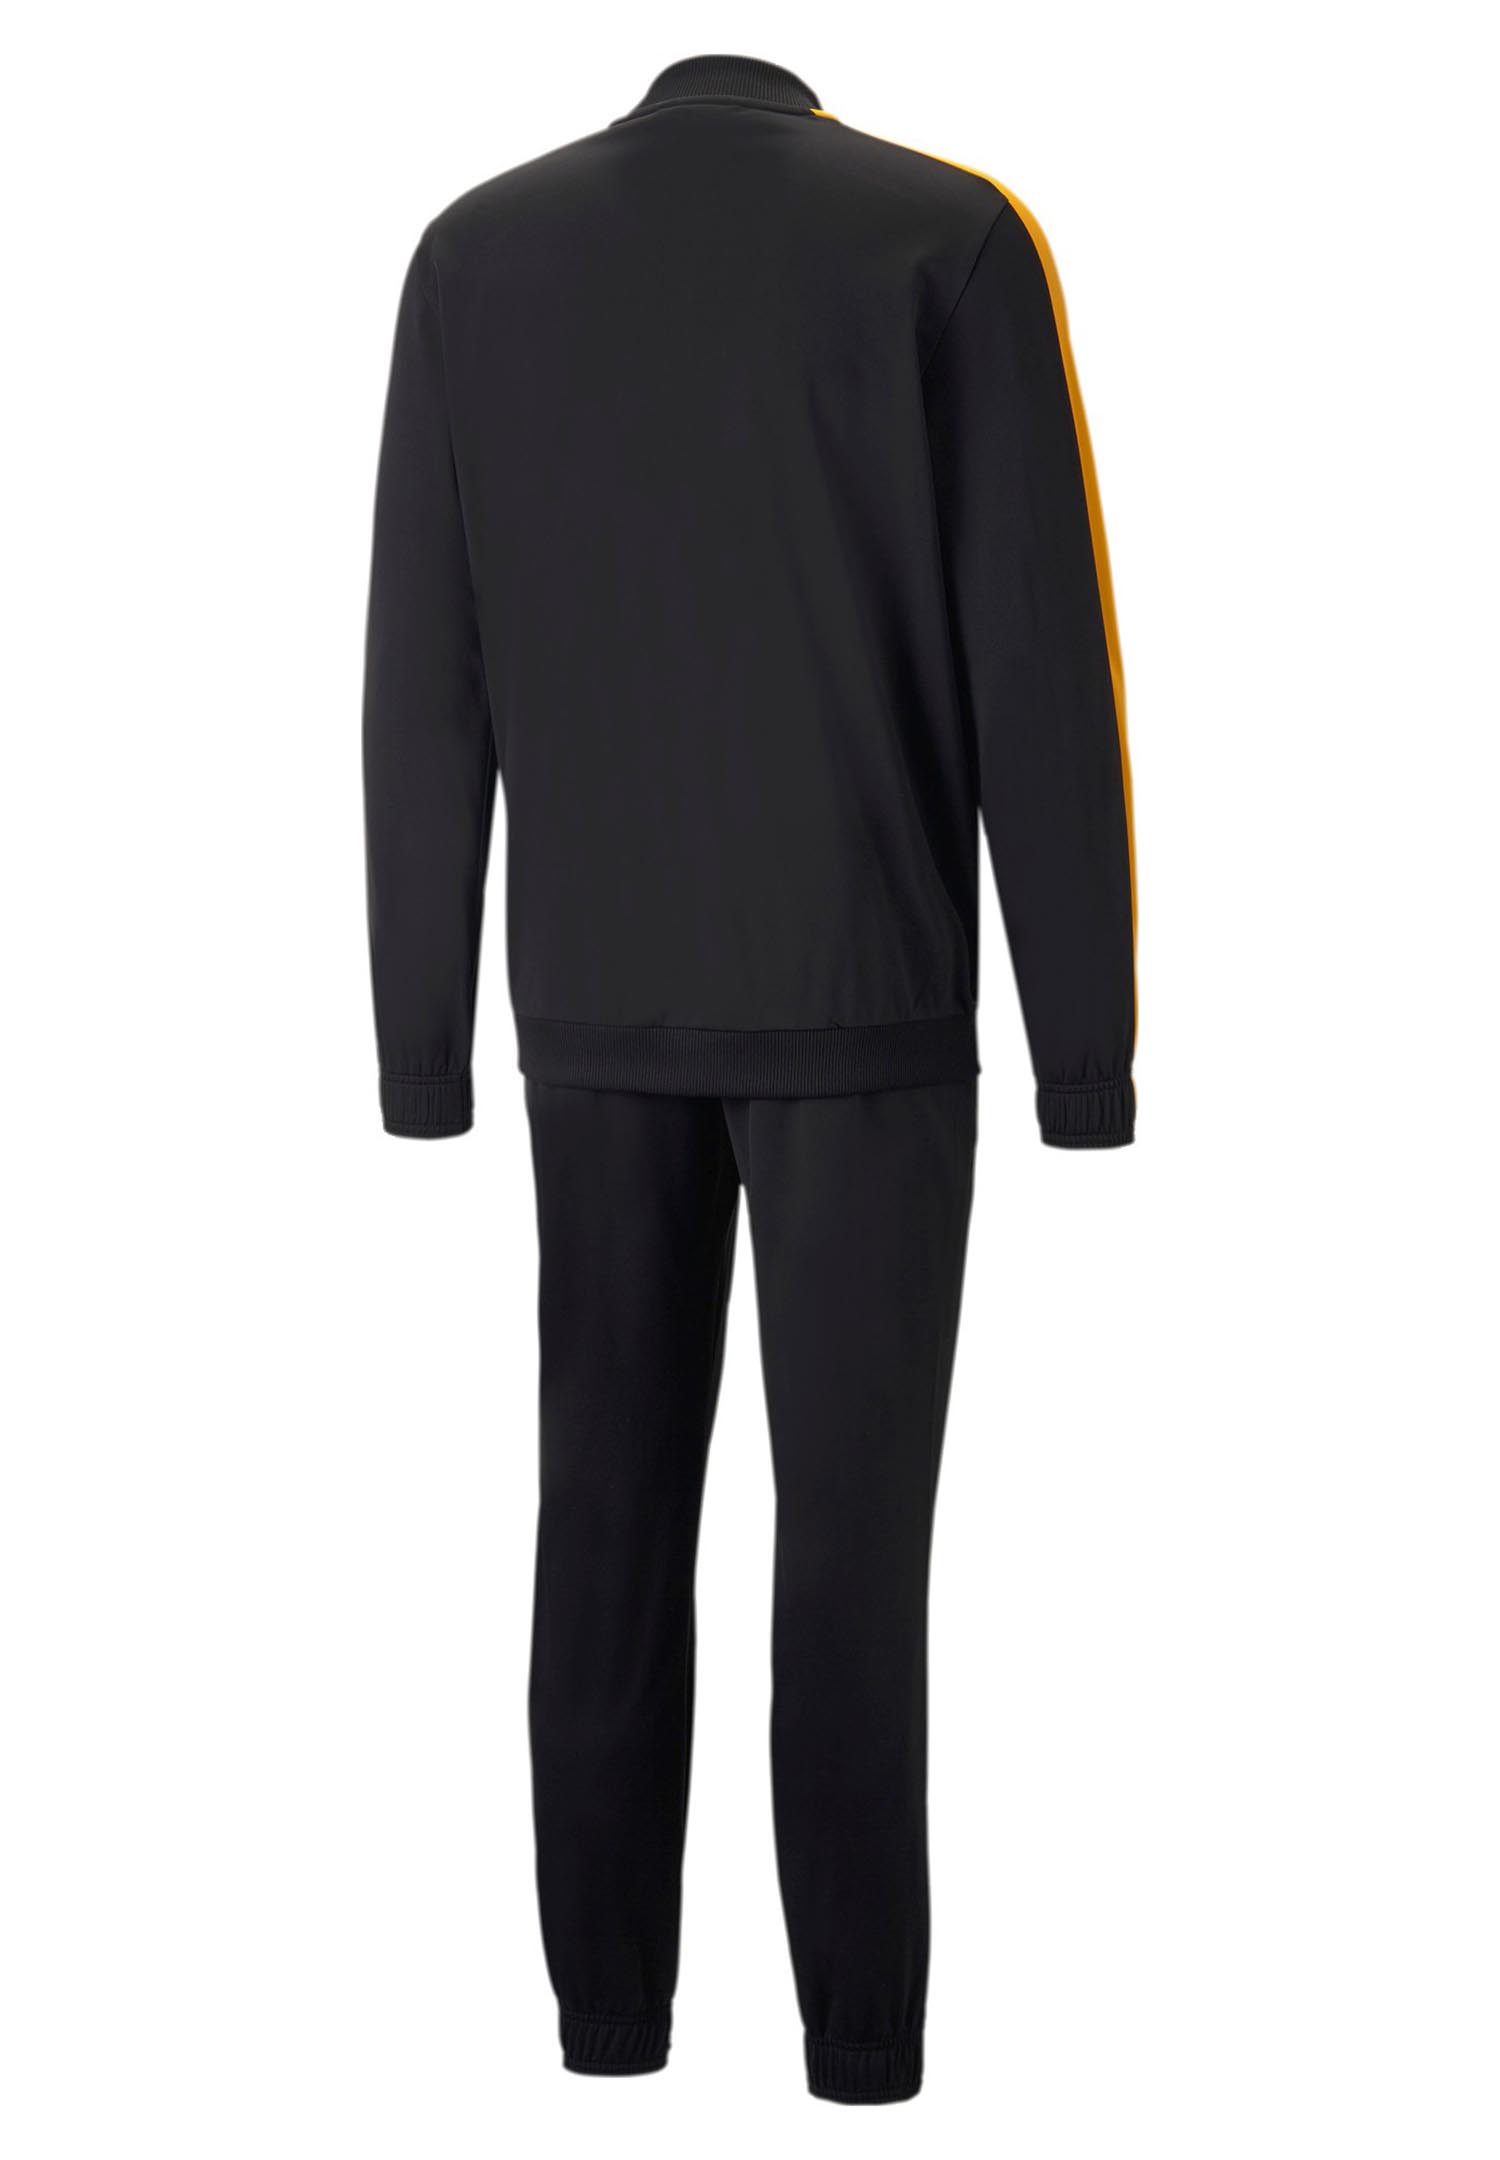 PUMA Herren Baseball Tricot Suit Trainingsanzug Jogginganzug 585843 51 schwarz